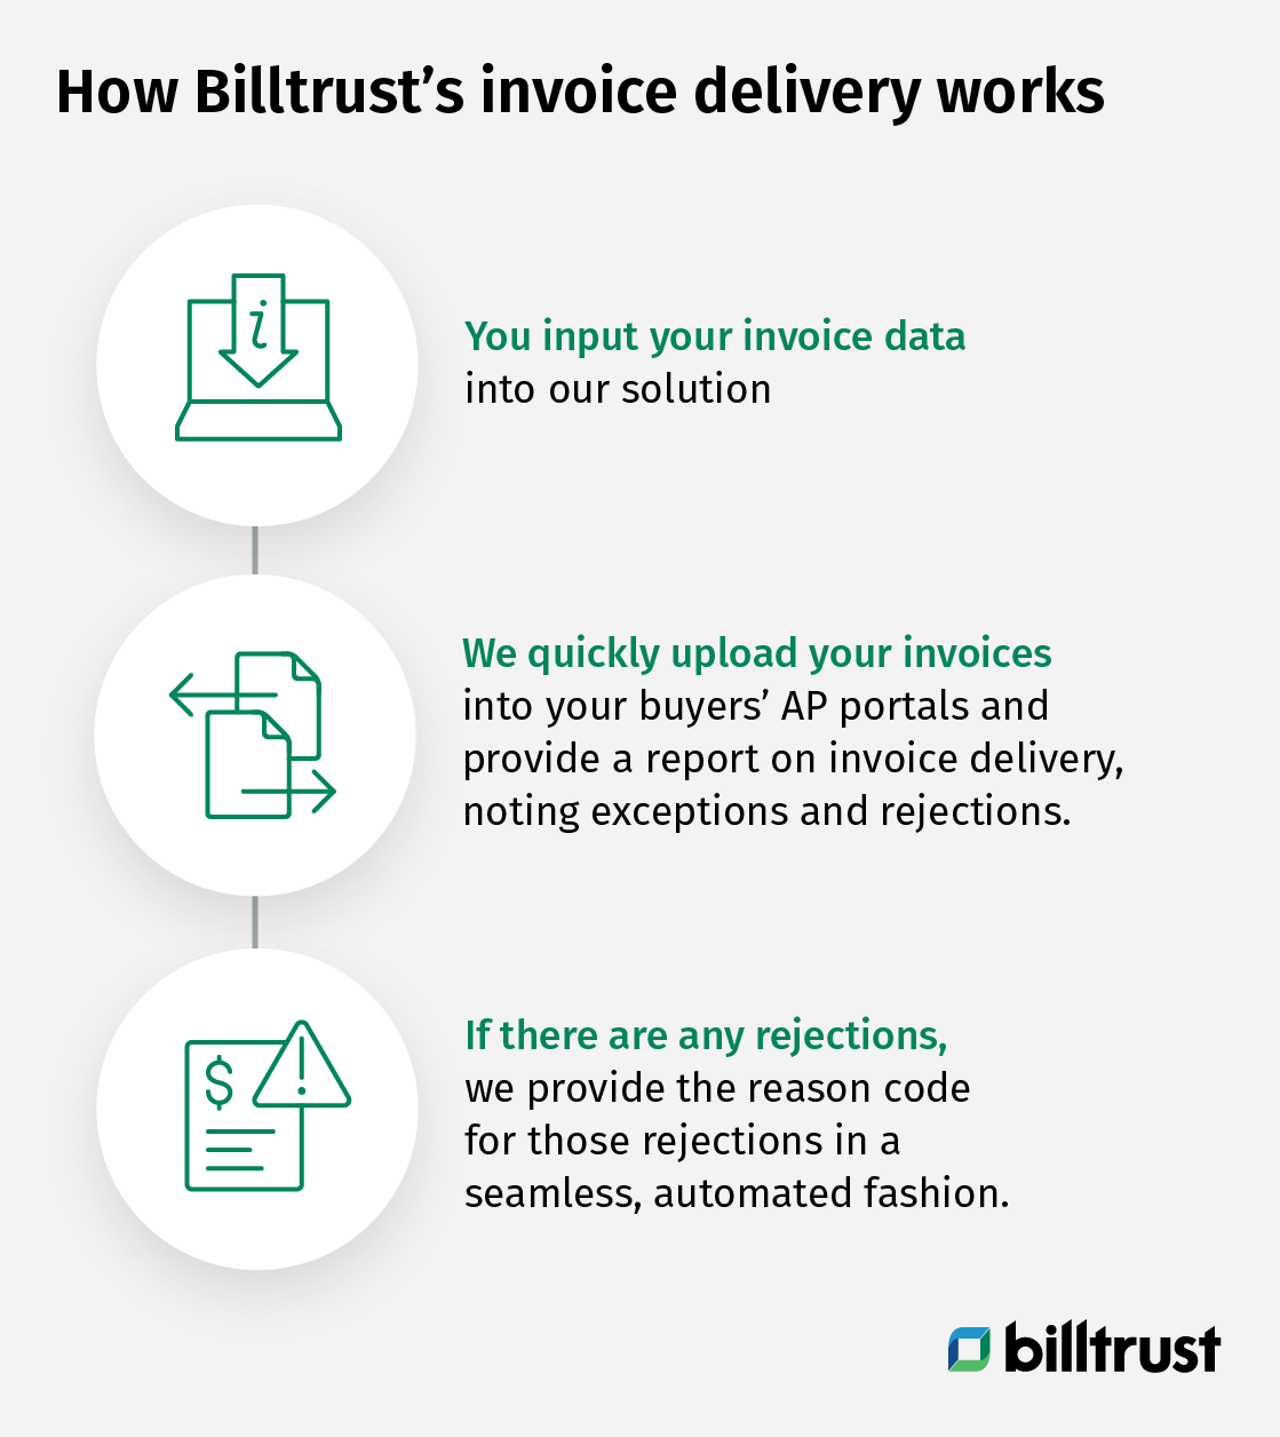 How Billtrust's invoice delivery works diagram